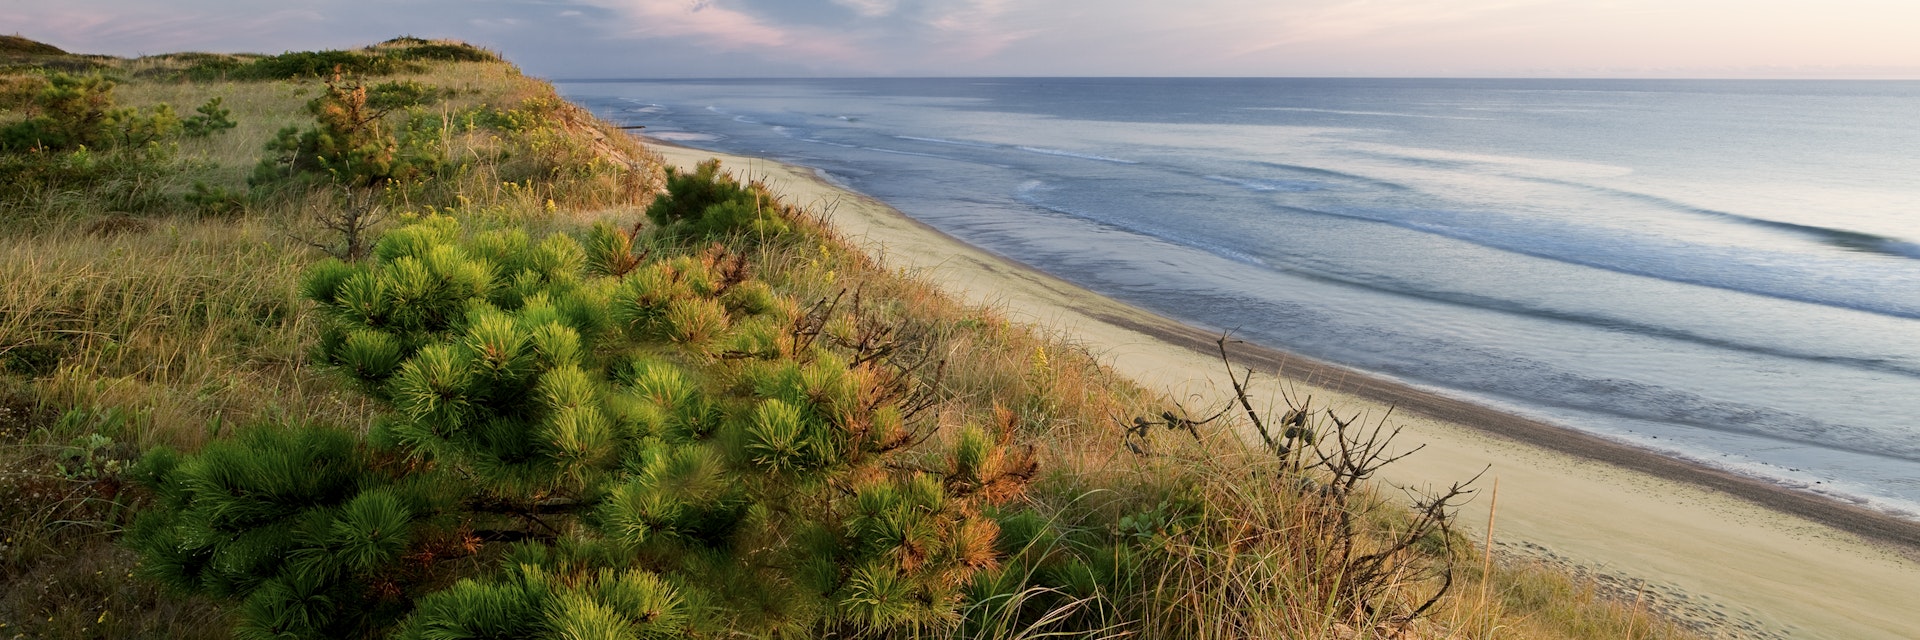 Dune's edge, pitch pine, Marconi beach, wellfleet, Cape Cod national seashore.